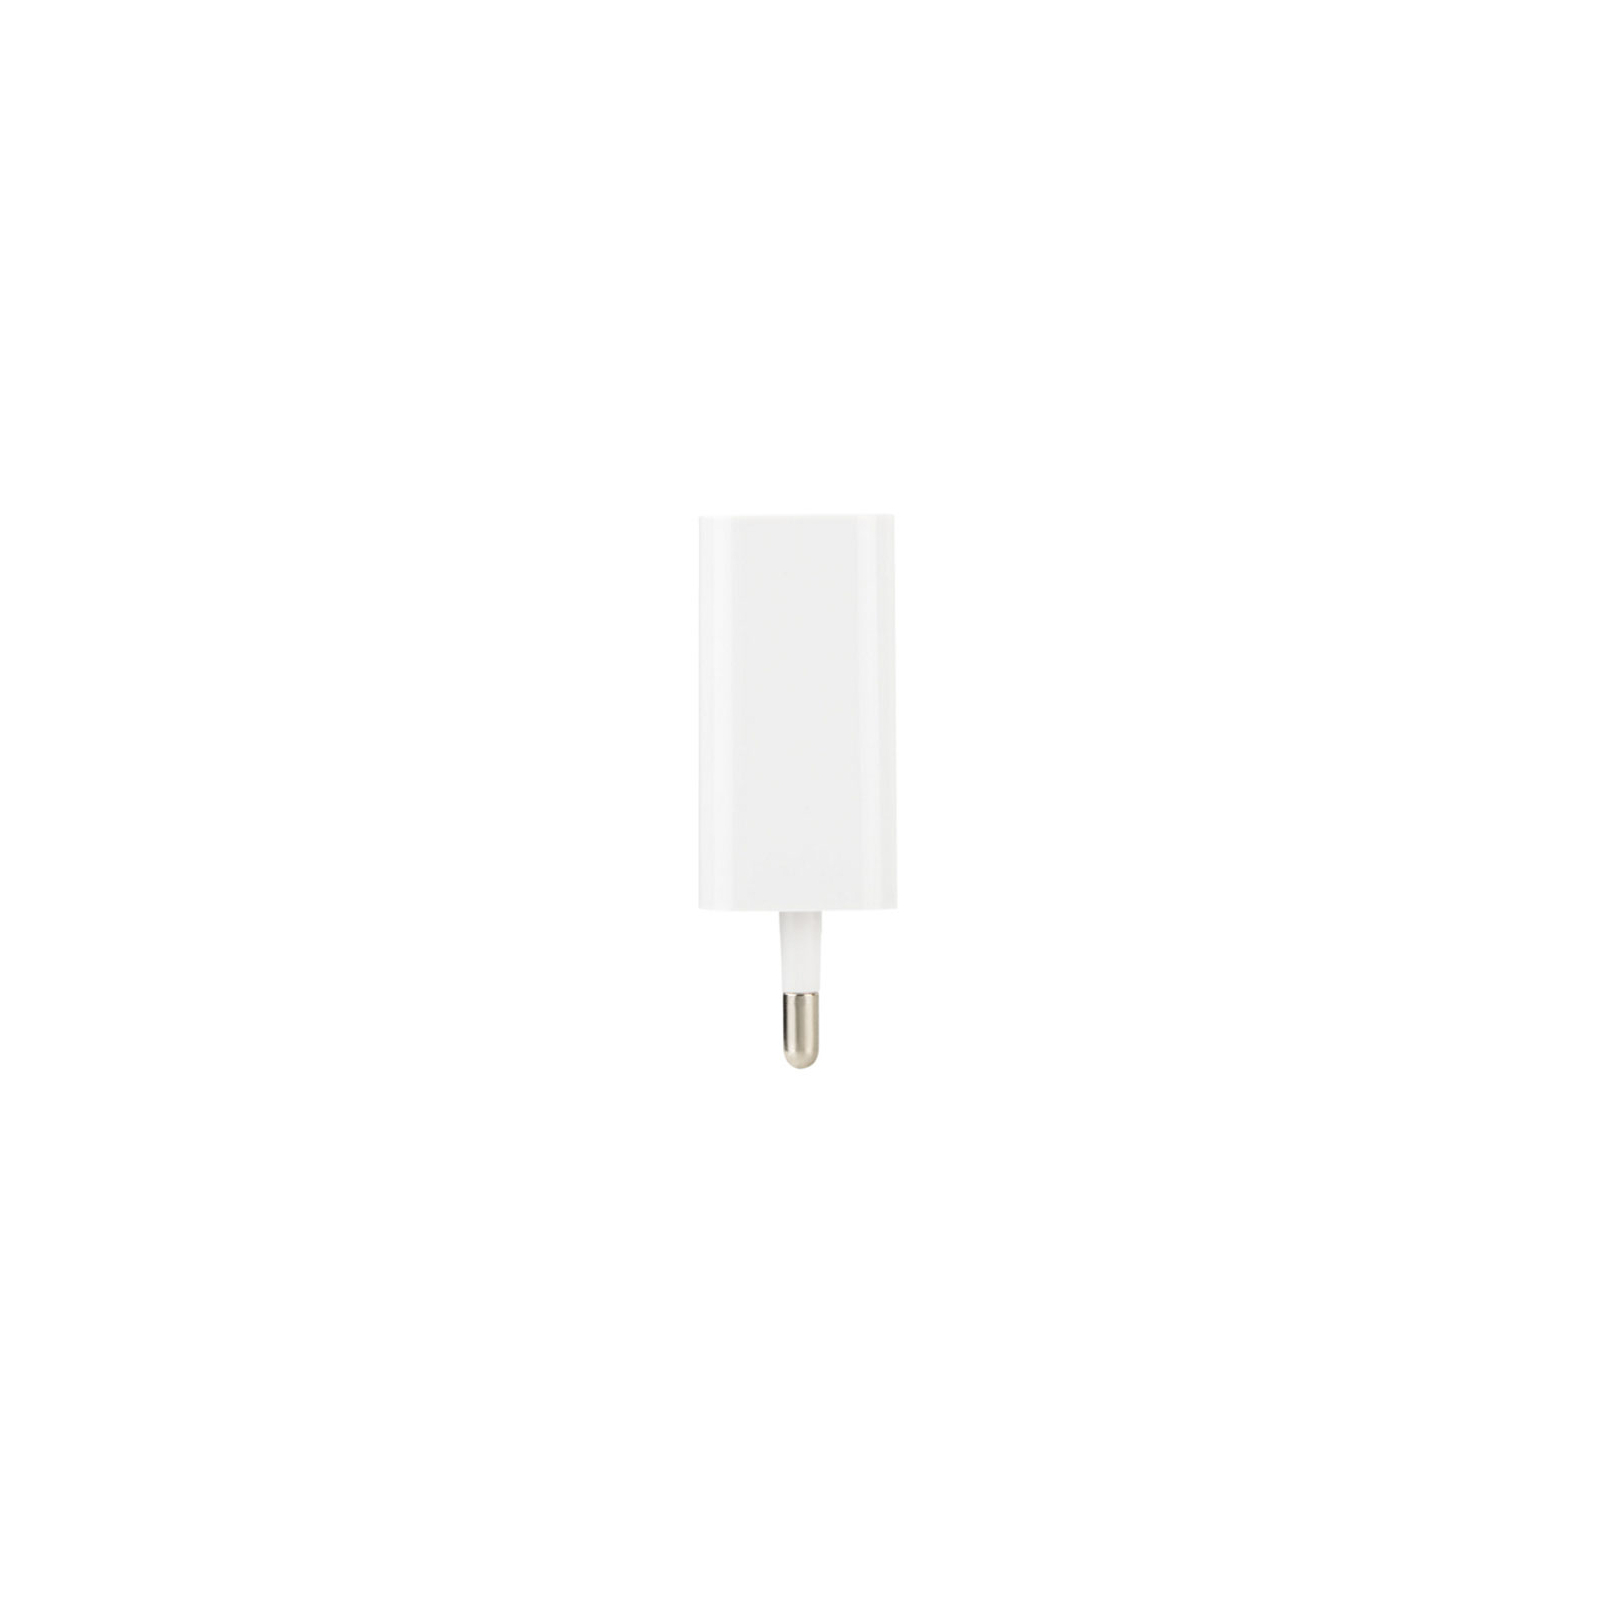 Зарядное устройство Meizu 1*USB 1.0А + cable MicroUSB White (46893) изображение 3